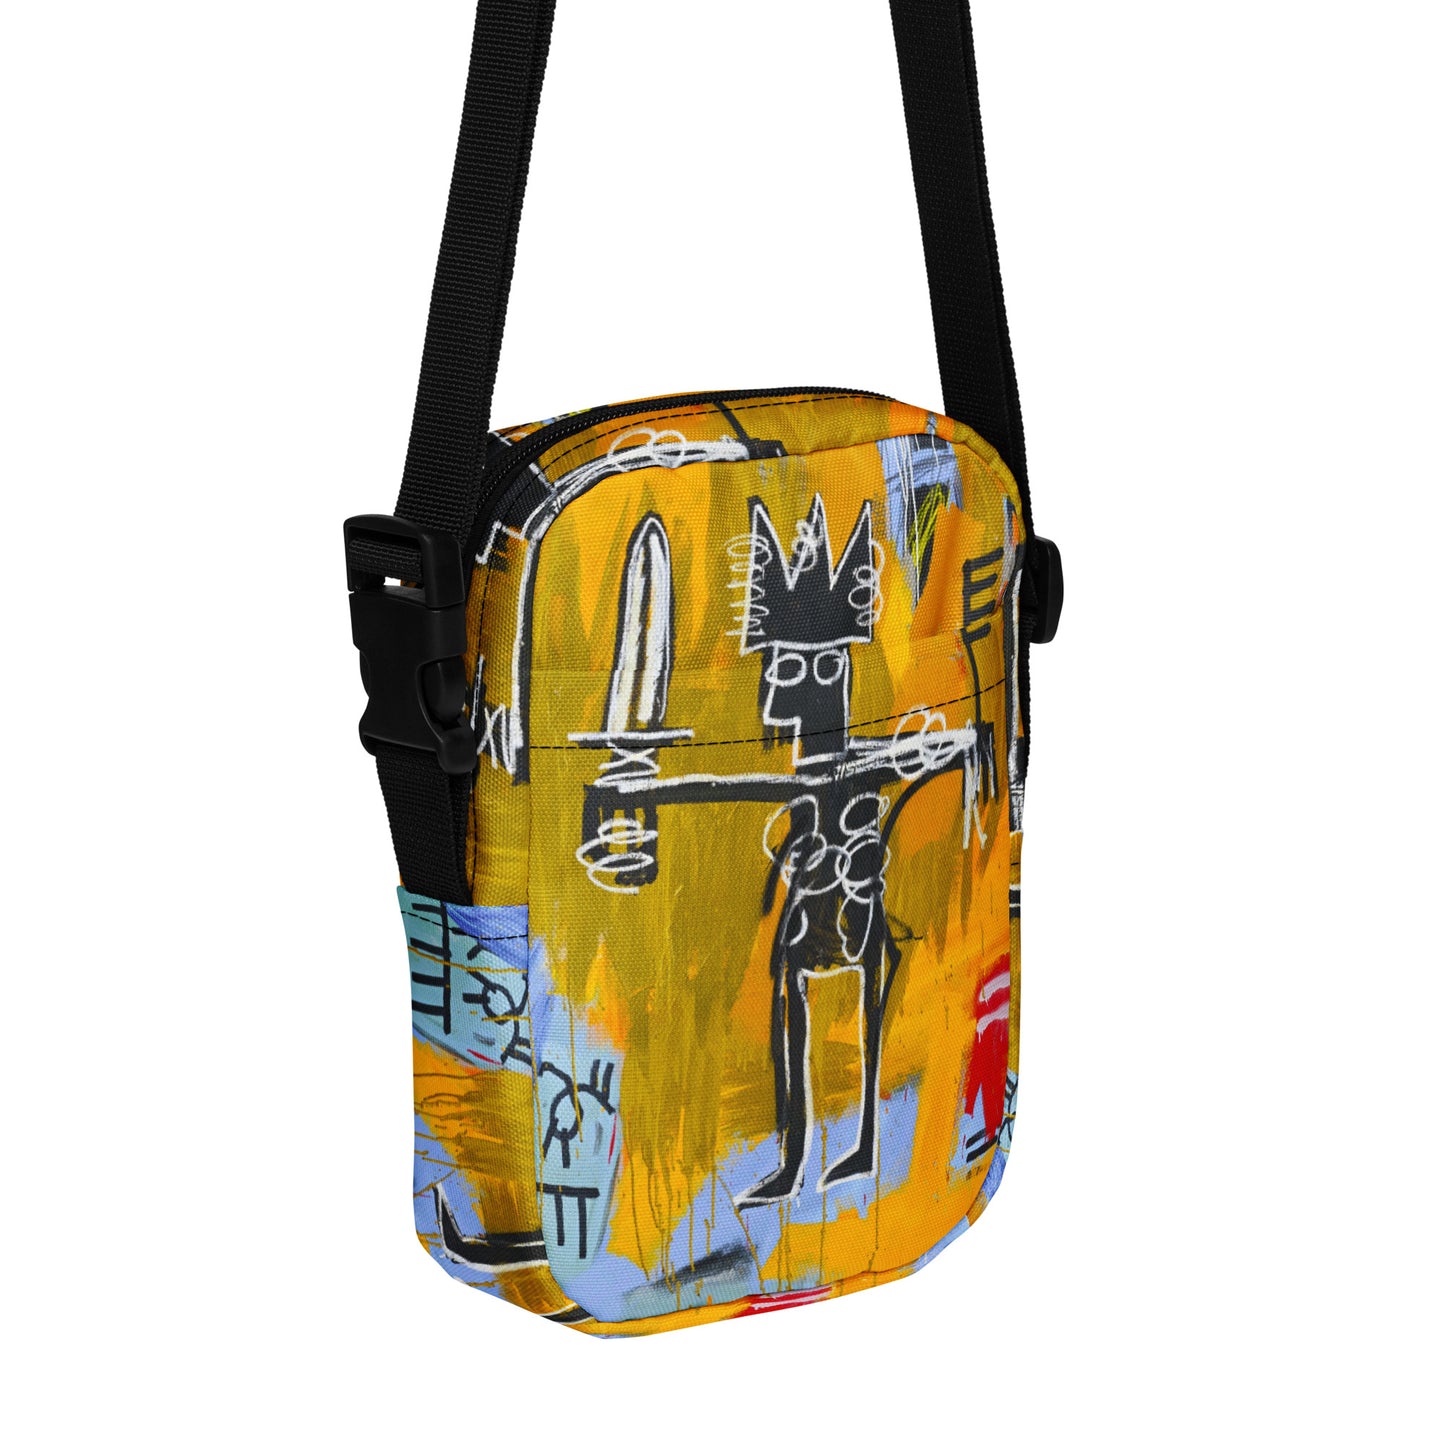 Jean-Michel Basquiat "Julius Caesar on Gold" Artwork Bag